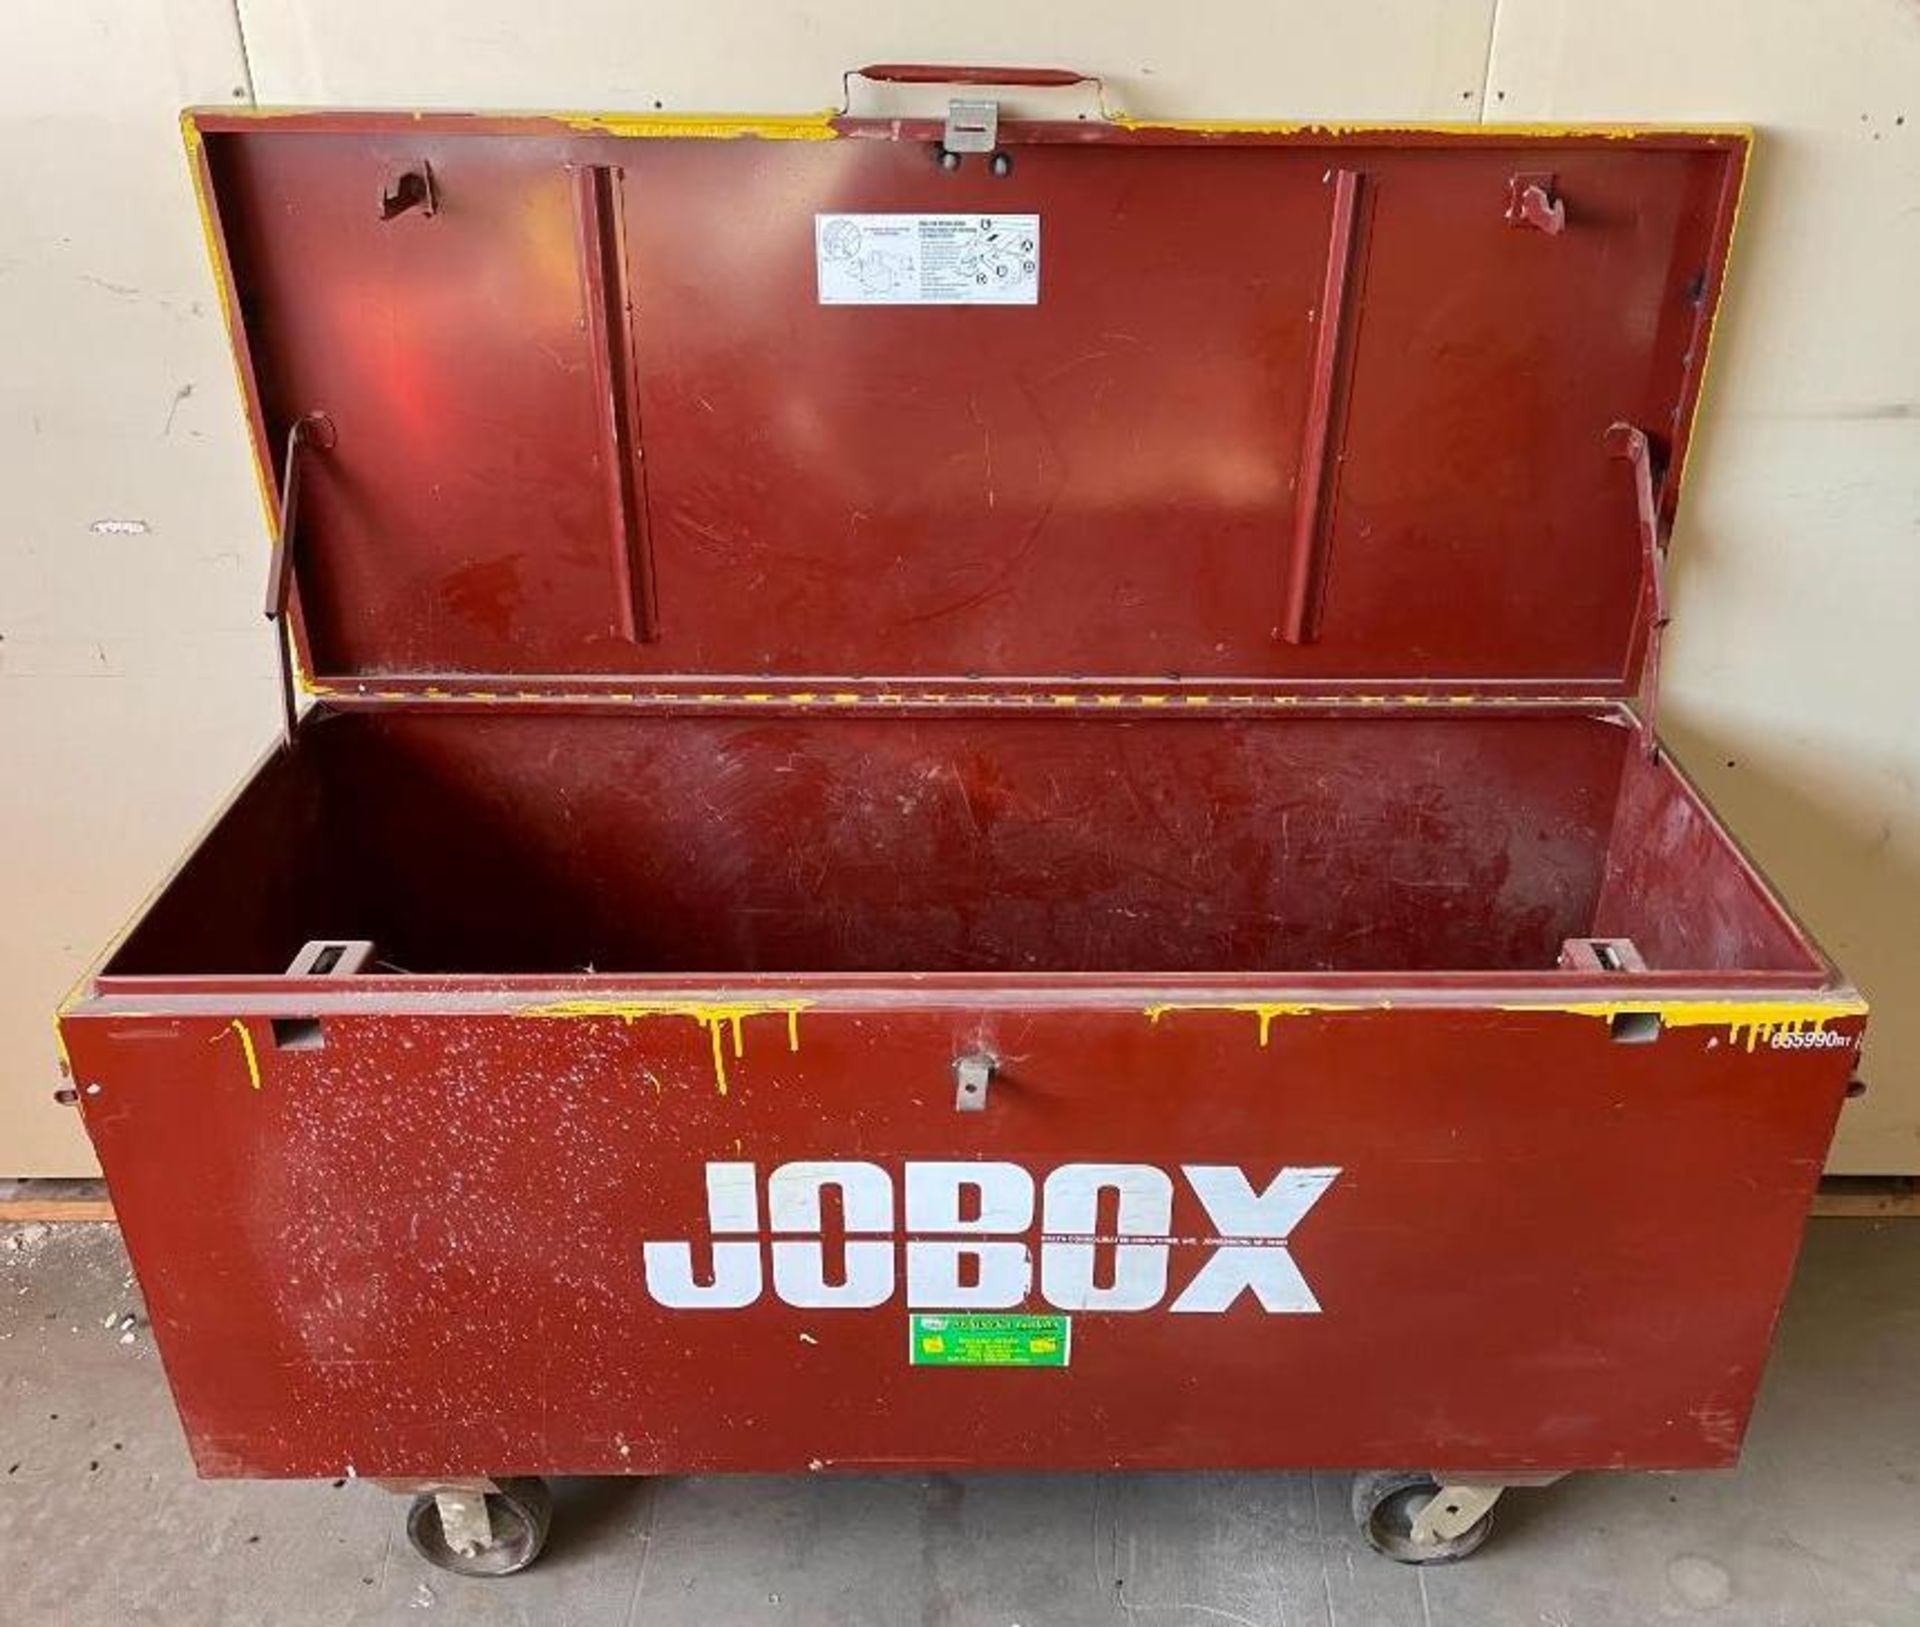 60" X 24" MOBILE JOB BOX SIZE: 60" X 24" X 36" LOCATION ROOM 1 QTY: 1